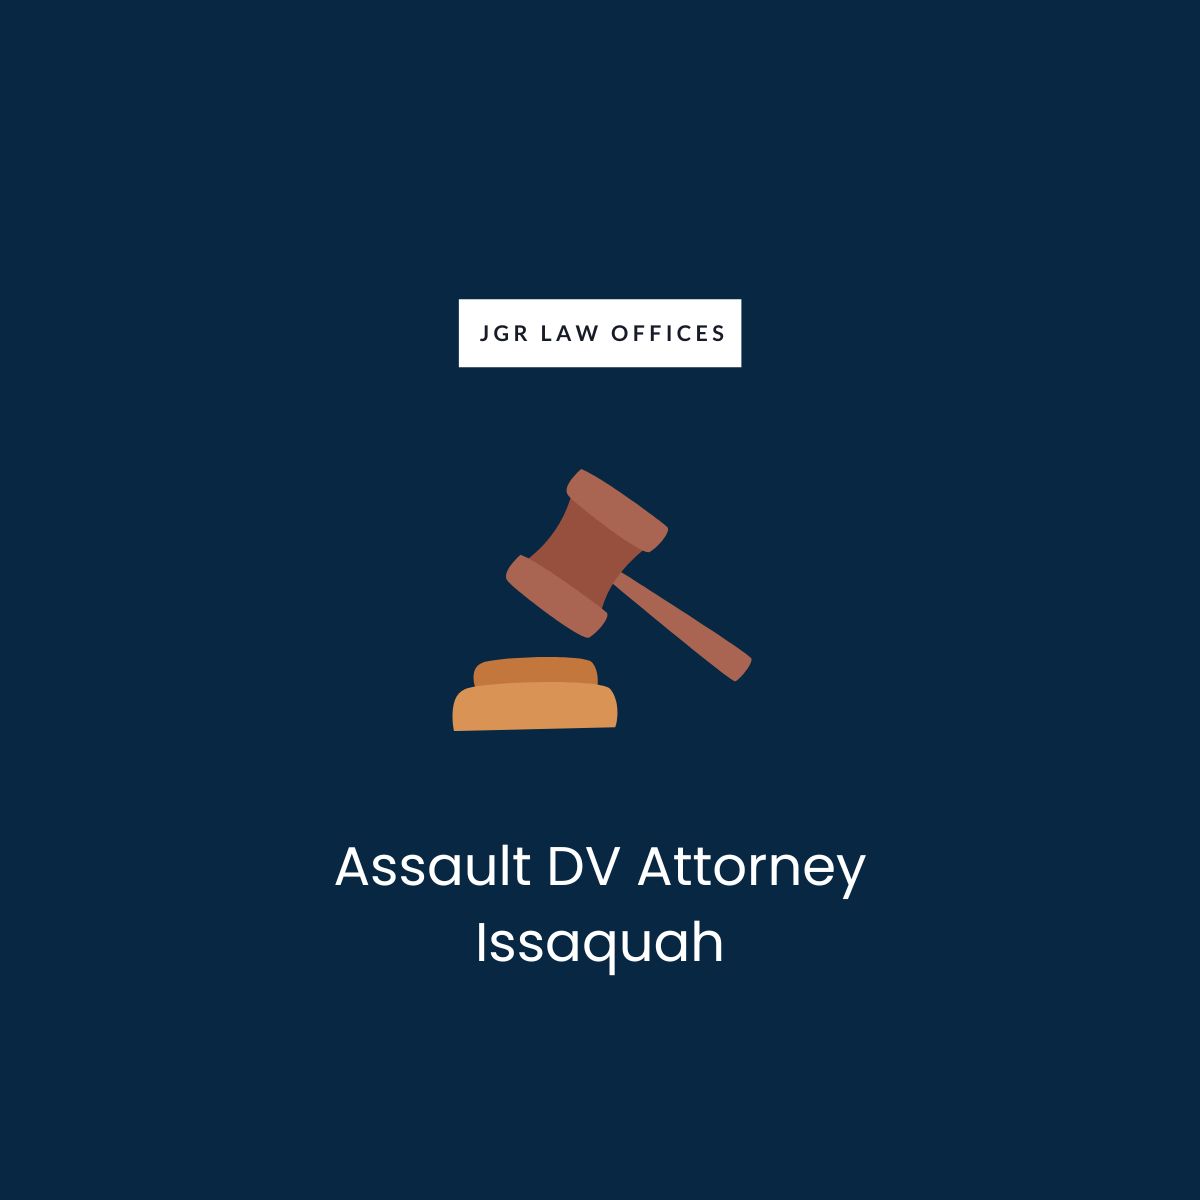 Assault DV Attorney Issaquah